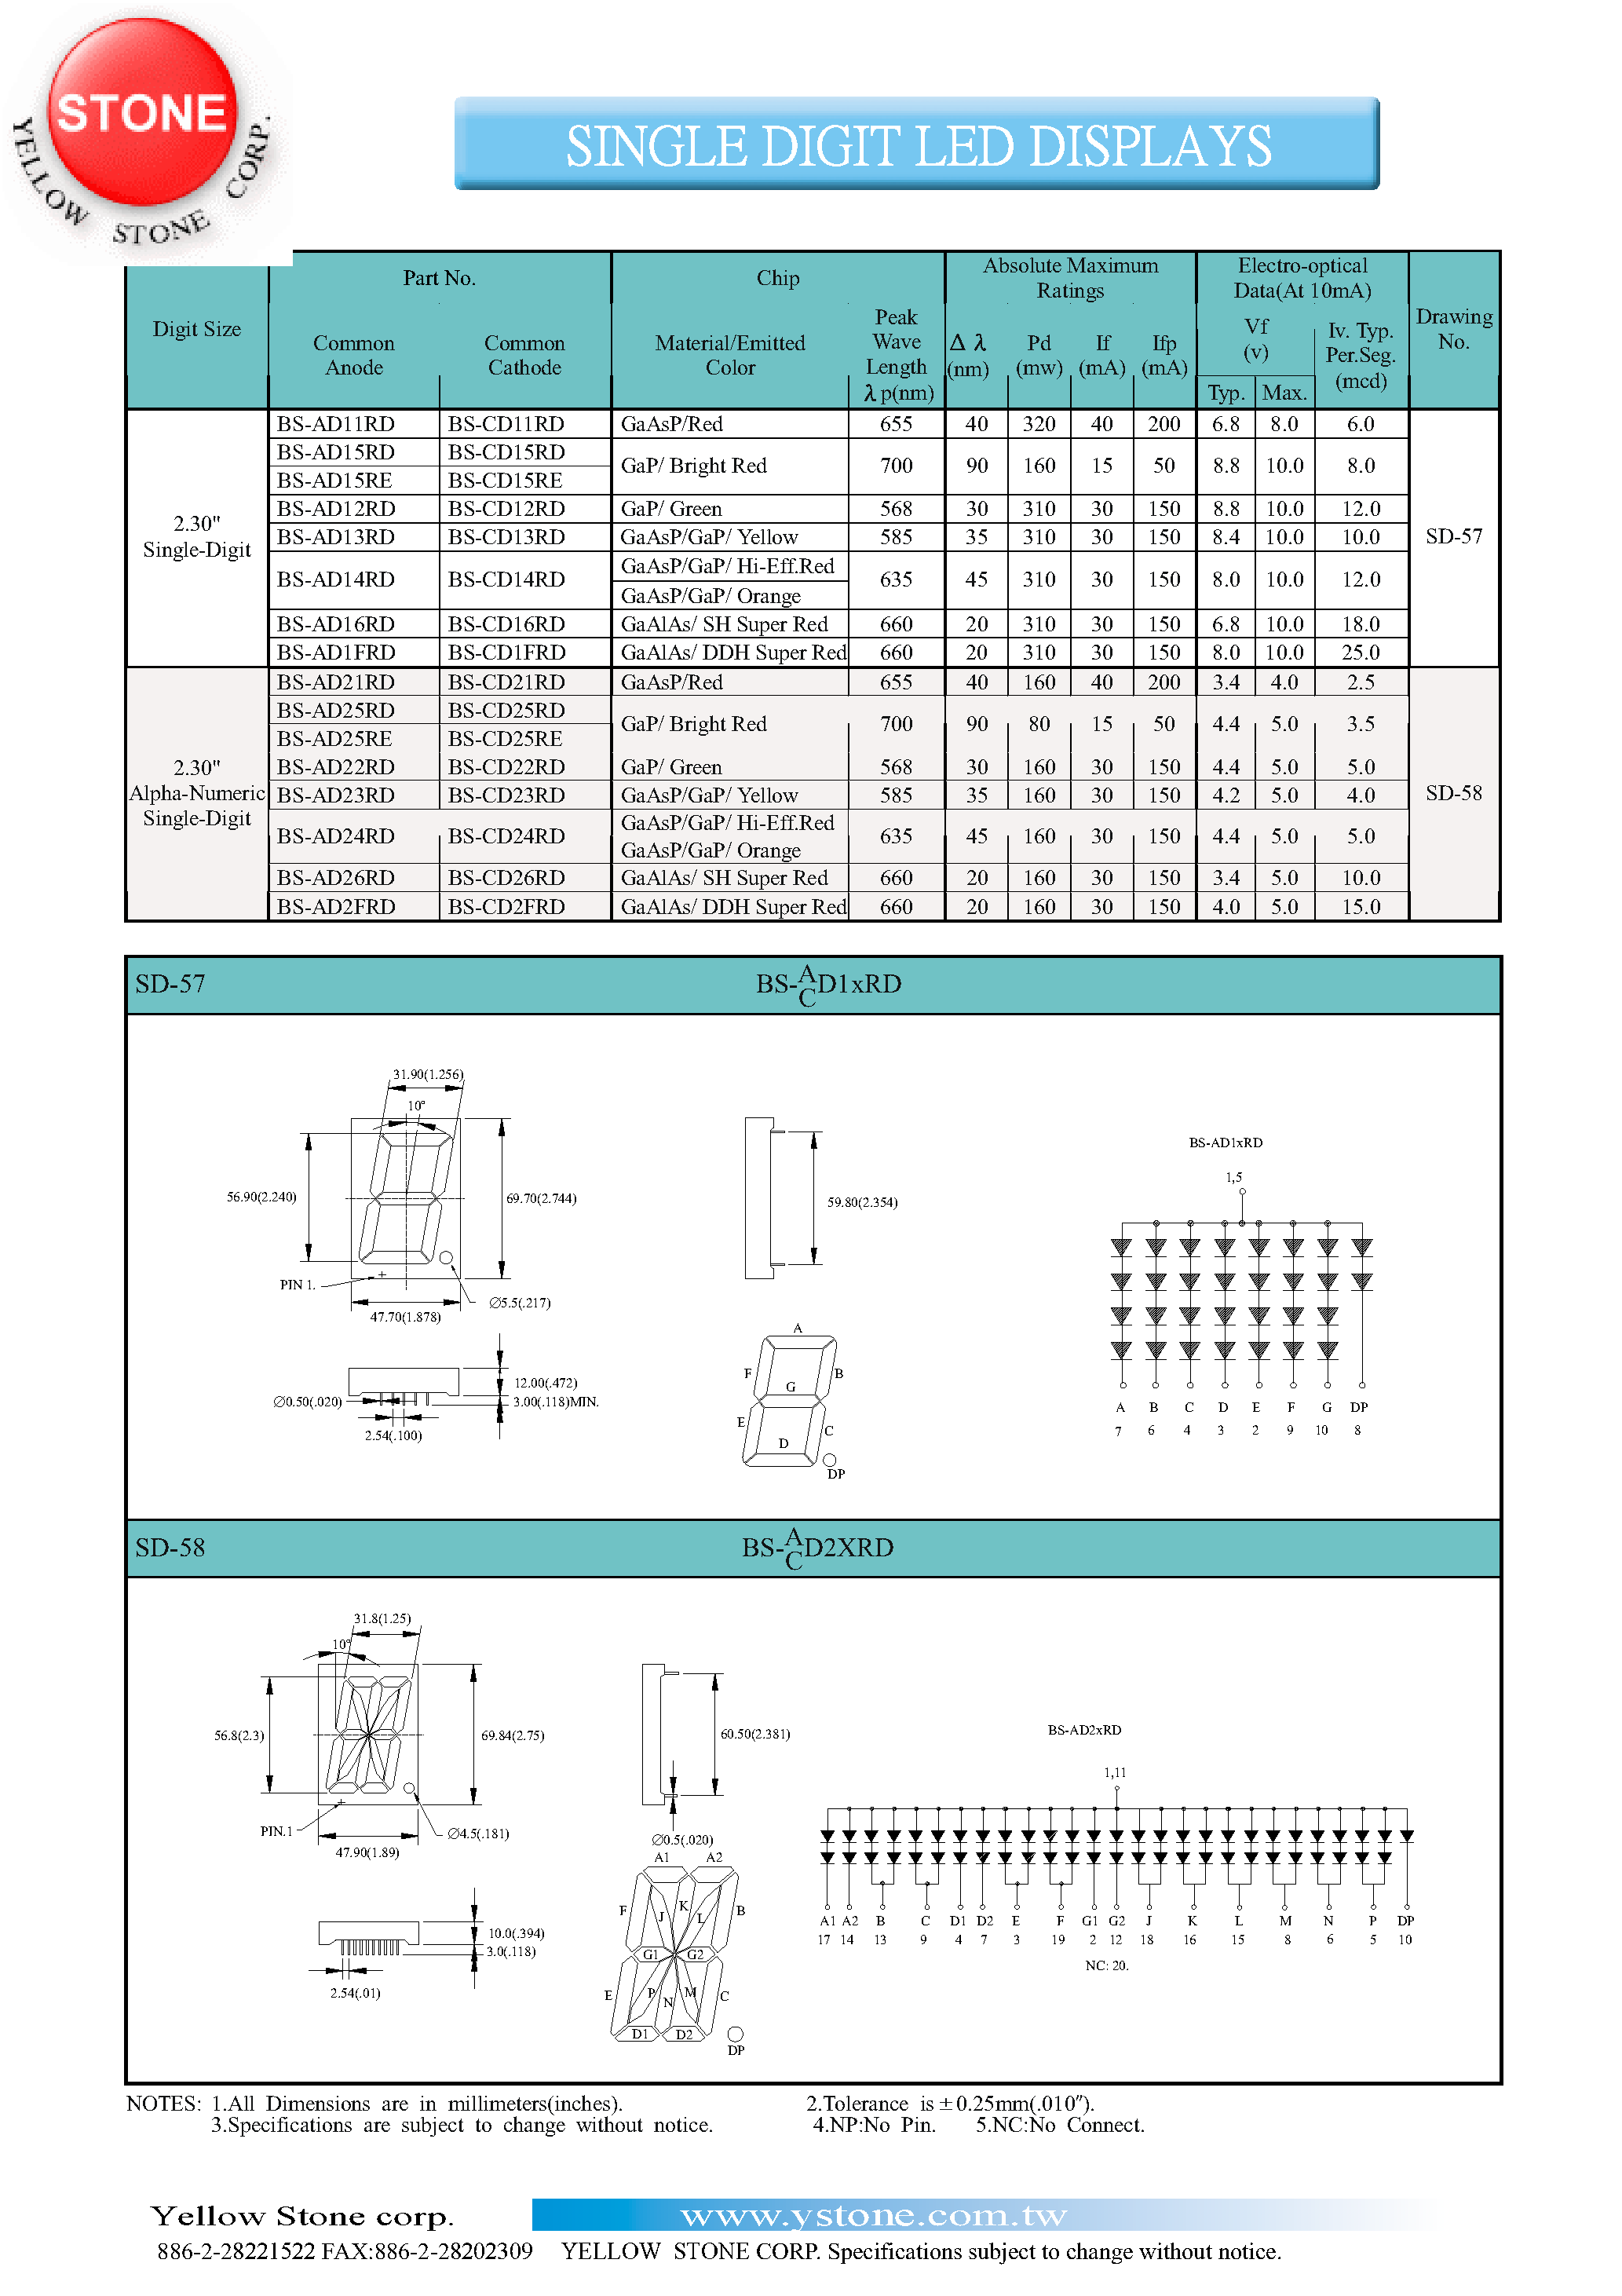 Datasheet BS-AD2FRD - SINGLE DIGIT LED DISPLAYS page 1